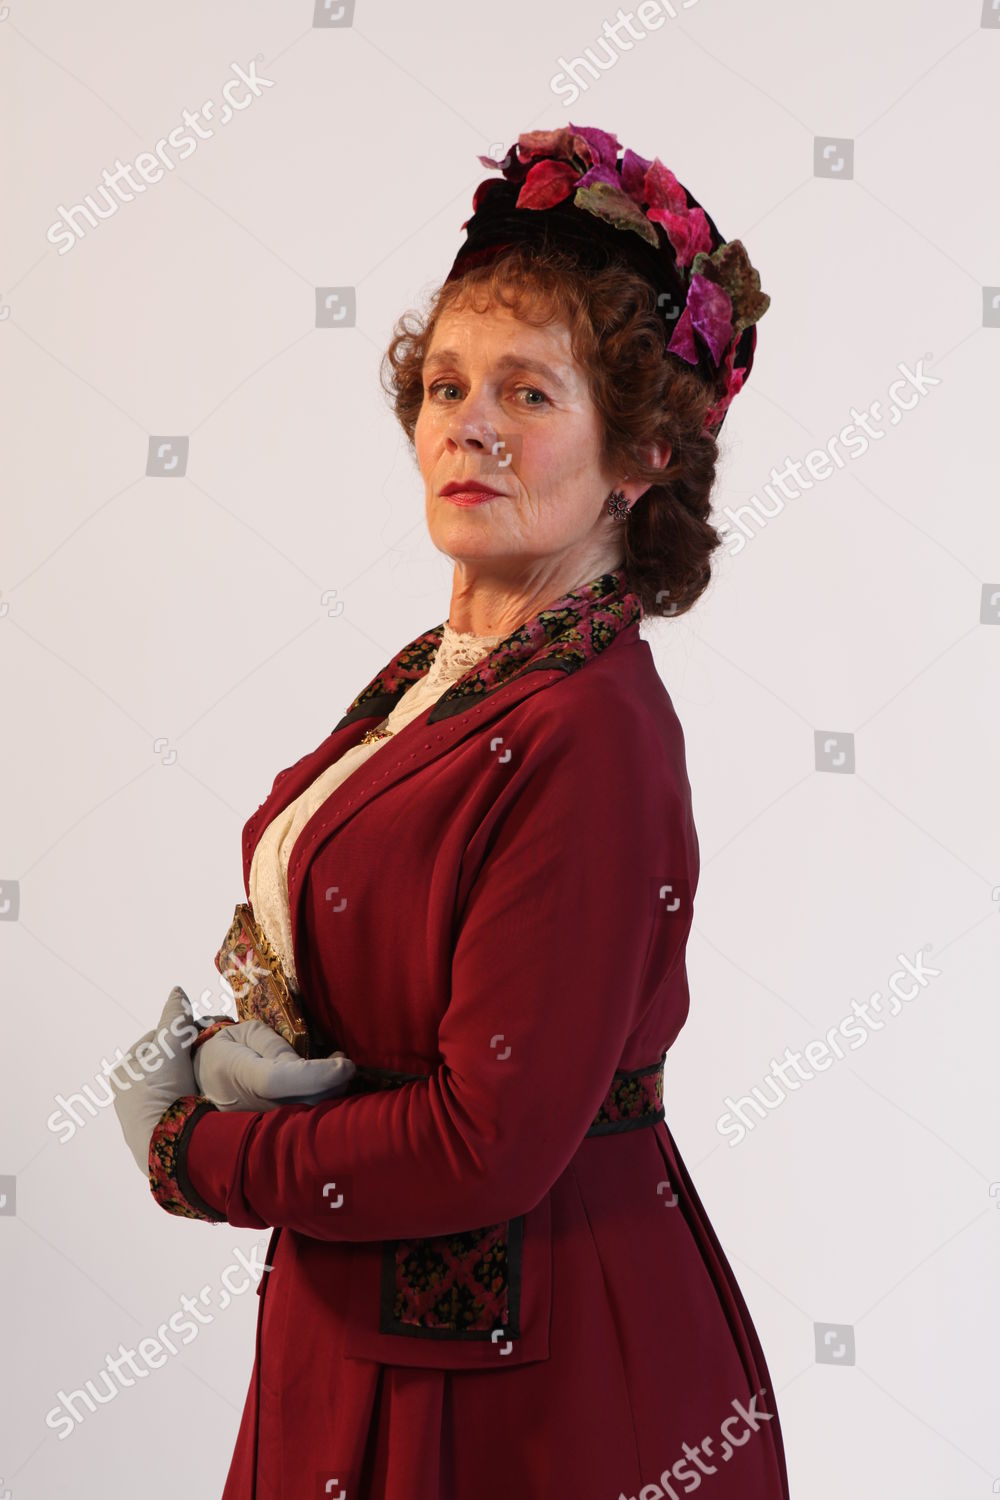 Celia Imrie Grace Rushton Editorial Stock Photo - Stock Image | Shutterstock